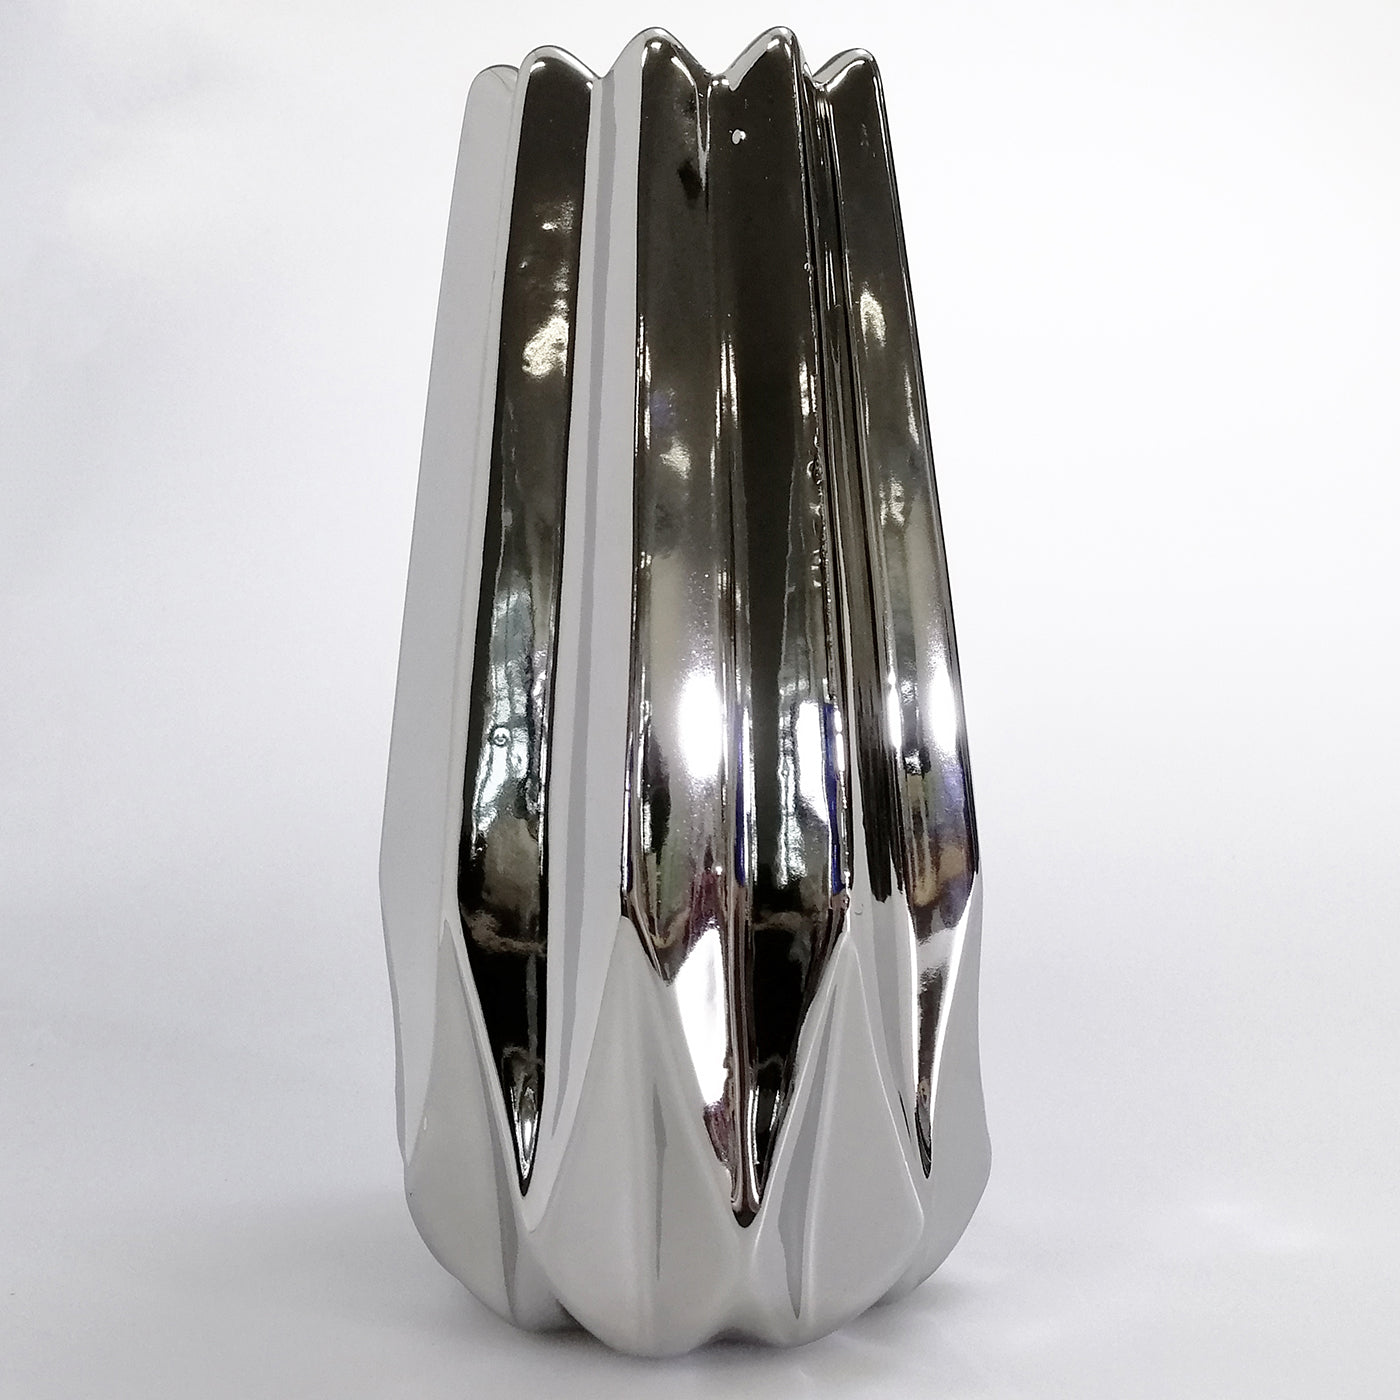 Geometric Metal Vase - Small